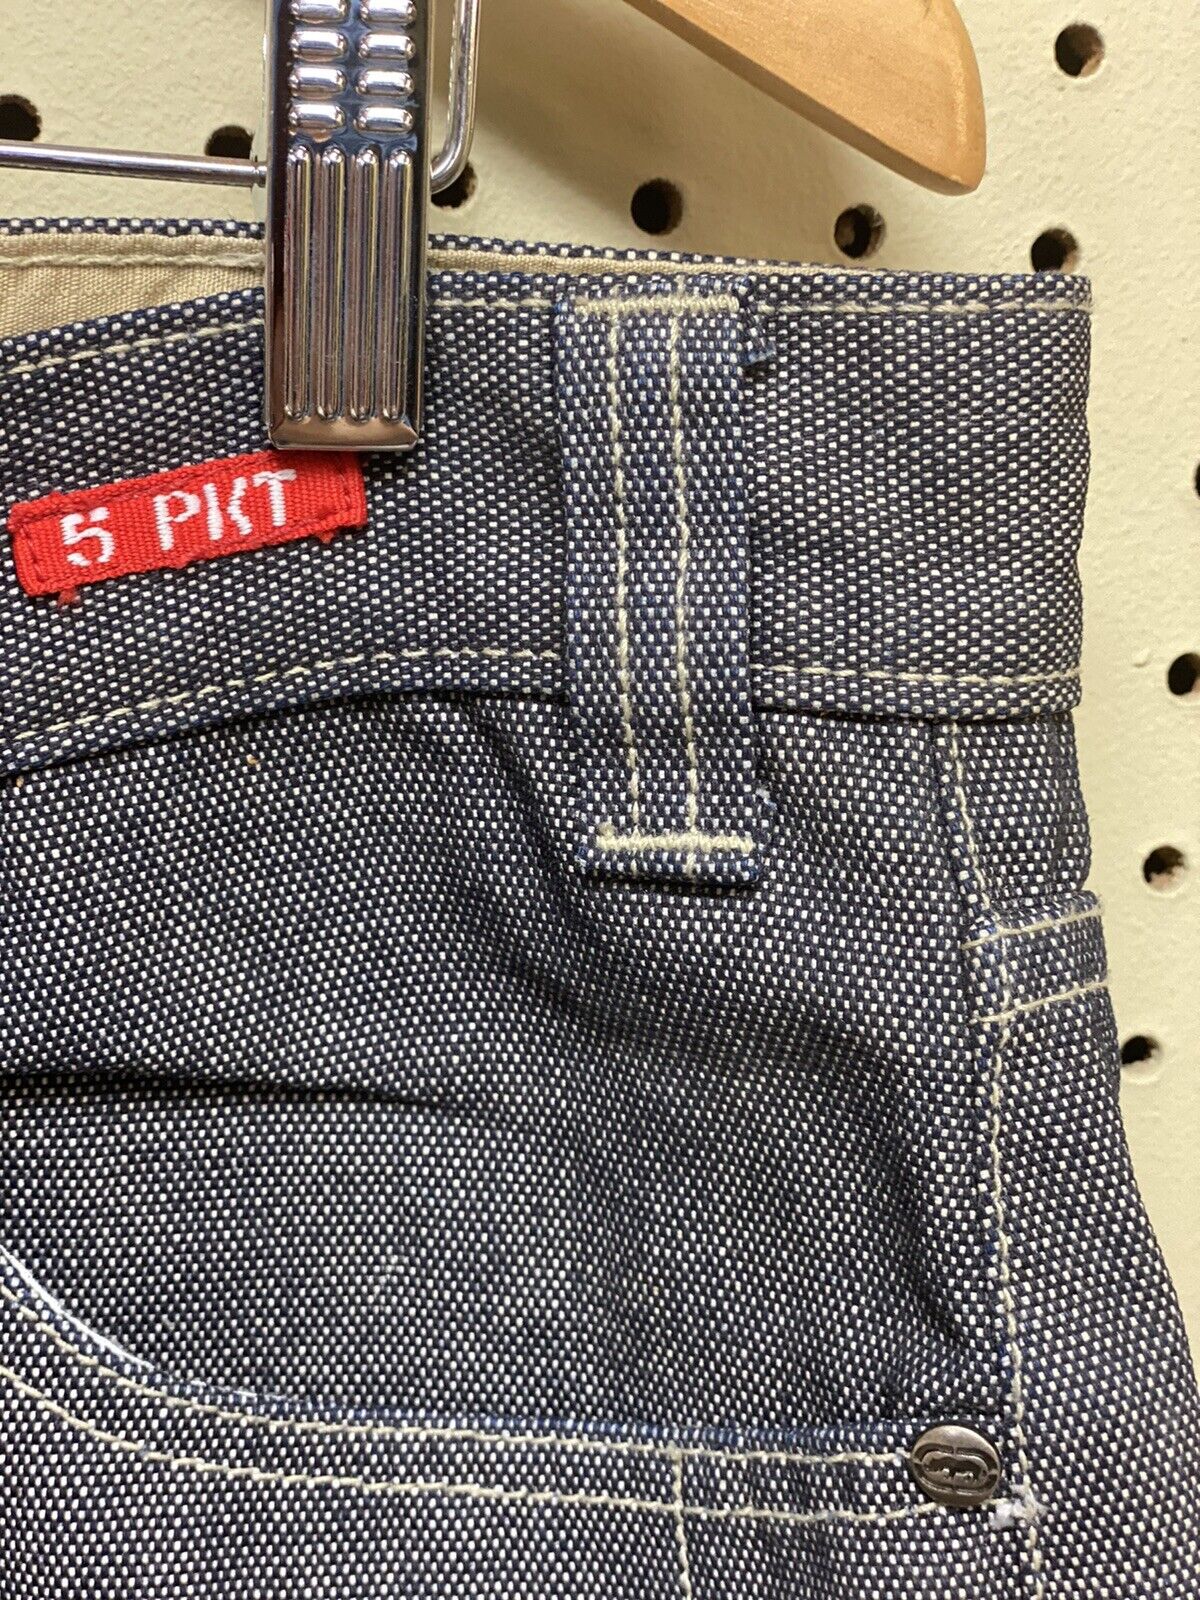 Vintage Ecko Unltd 5th Anniversary Limited Edition Denim Jeans 5 Pocket  38x34